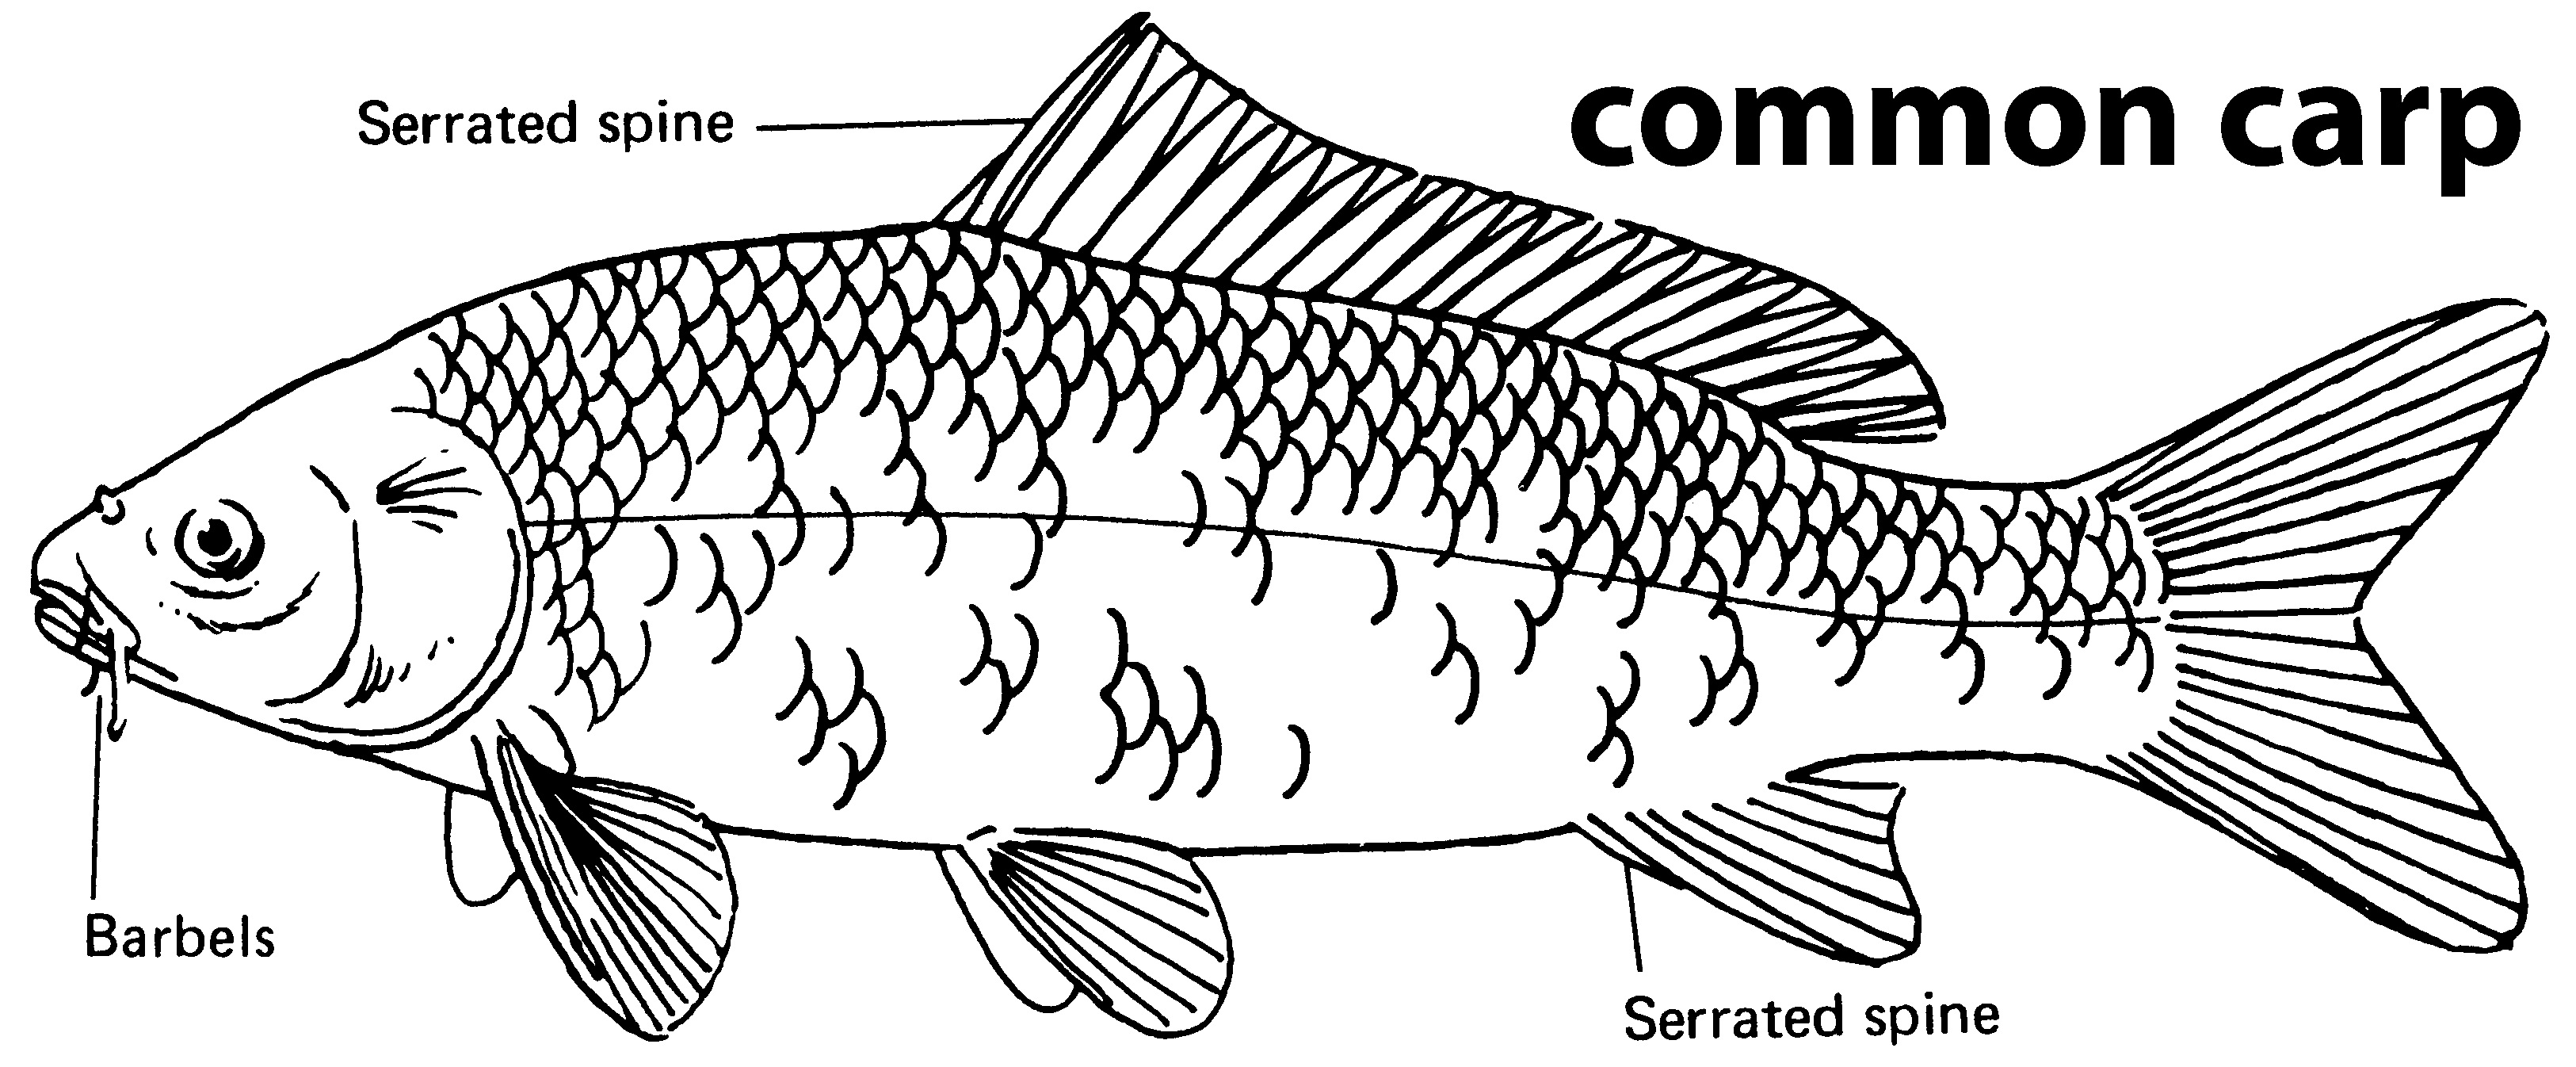 characteristics of a common carp